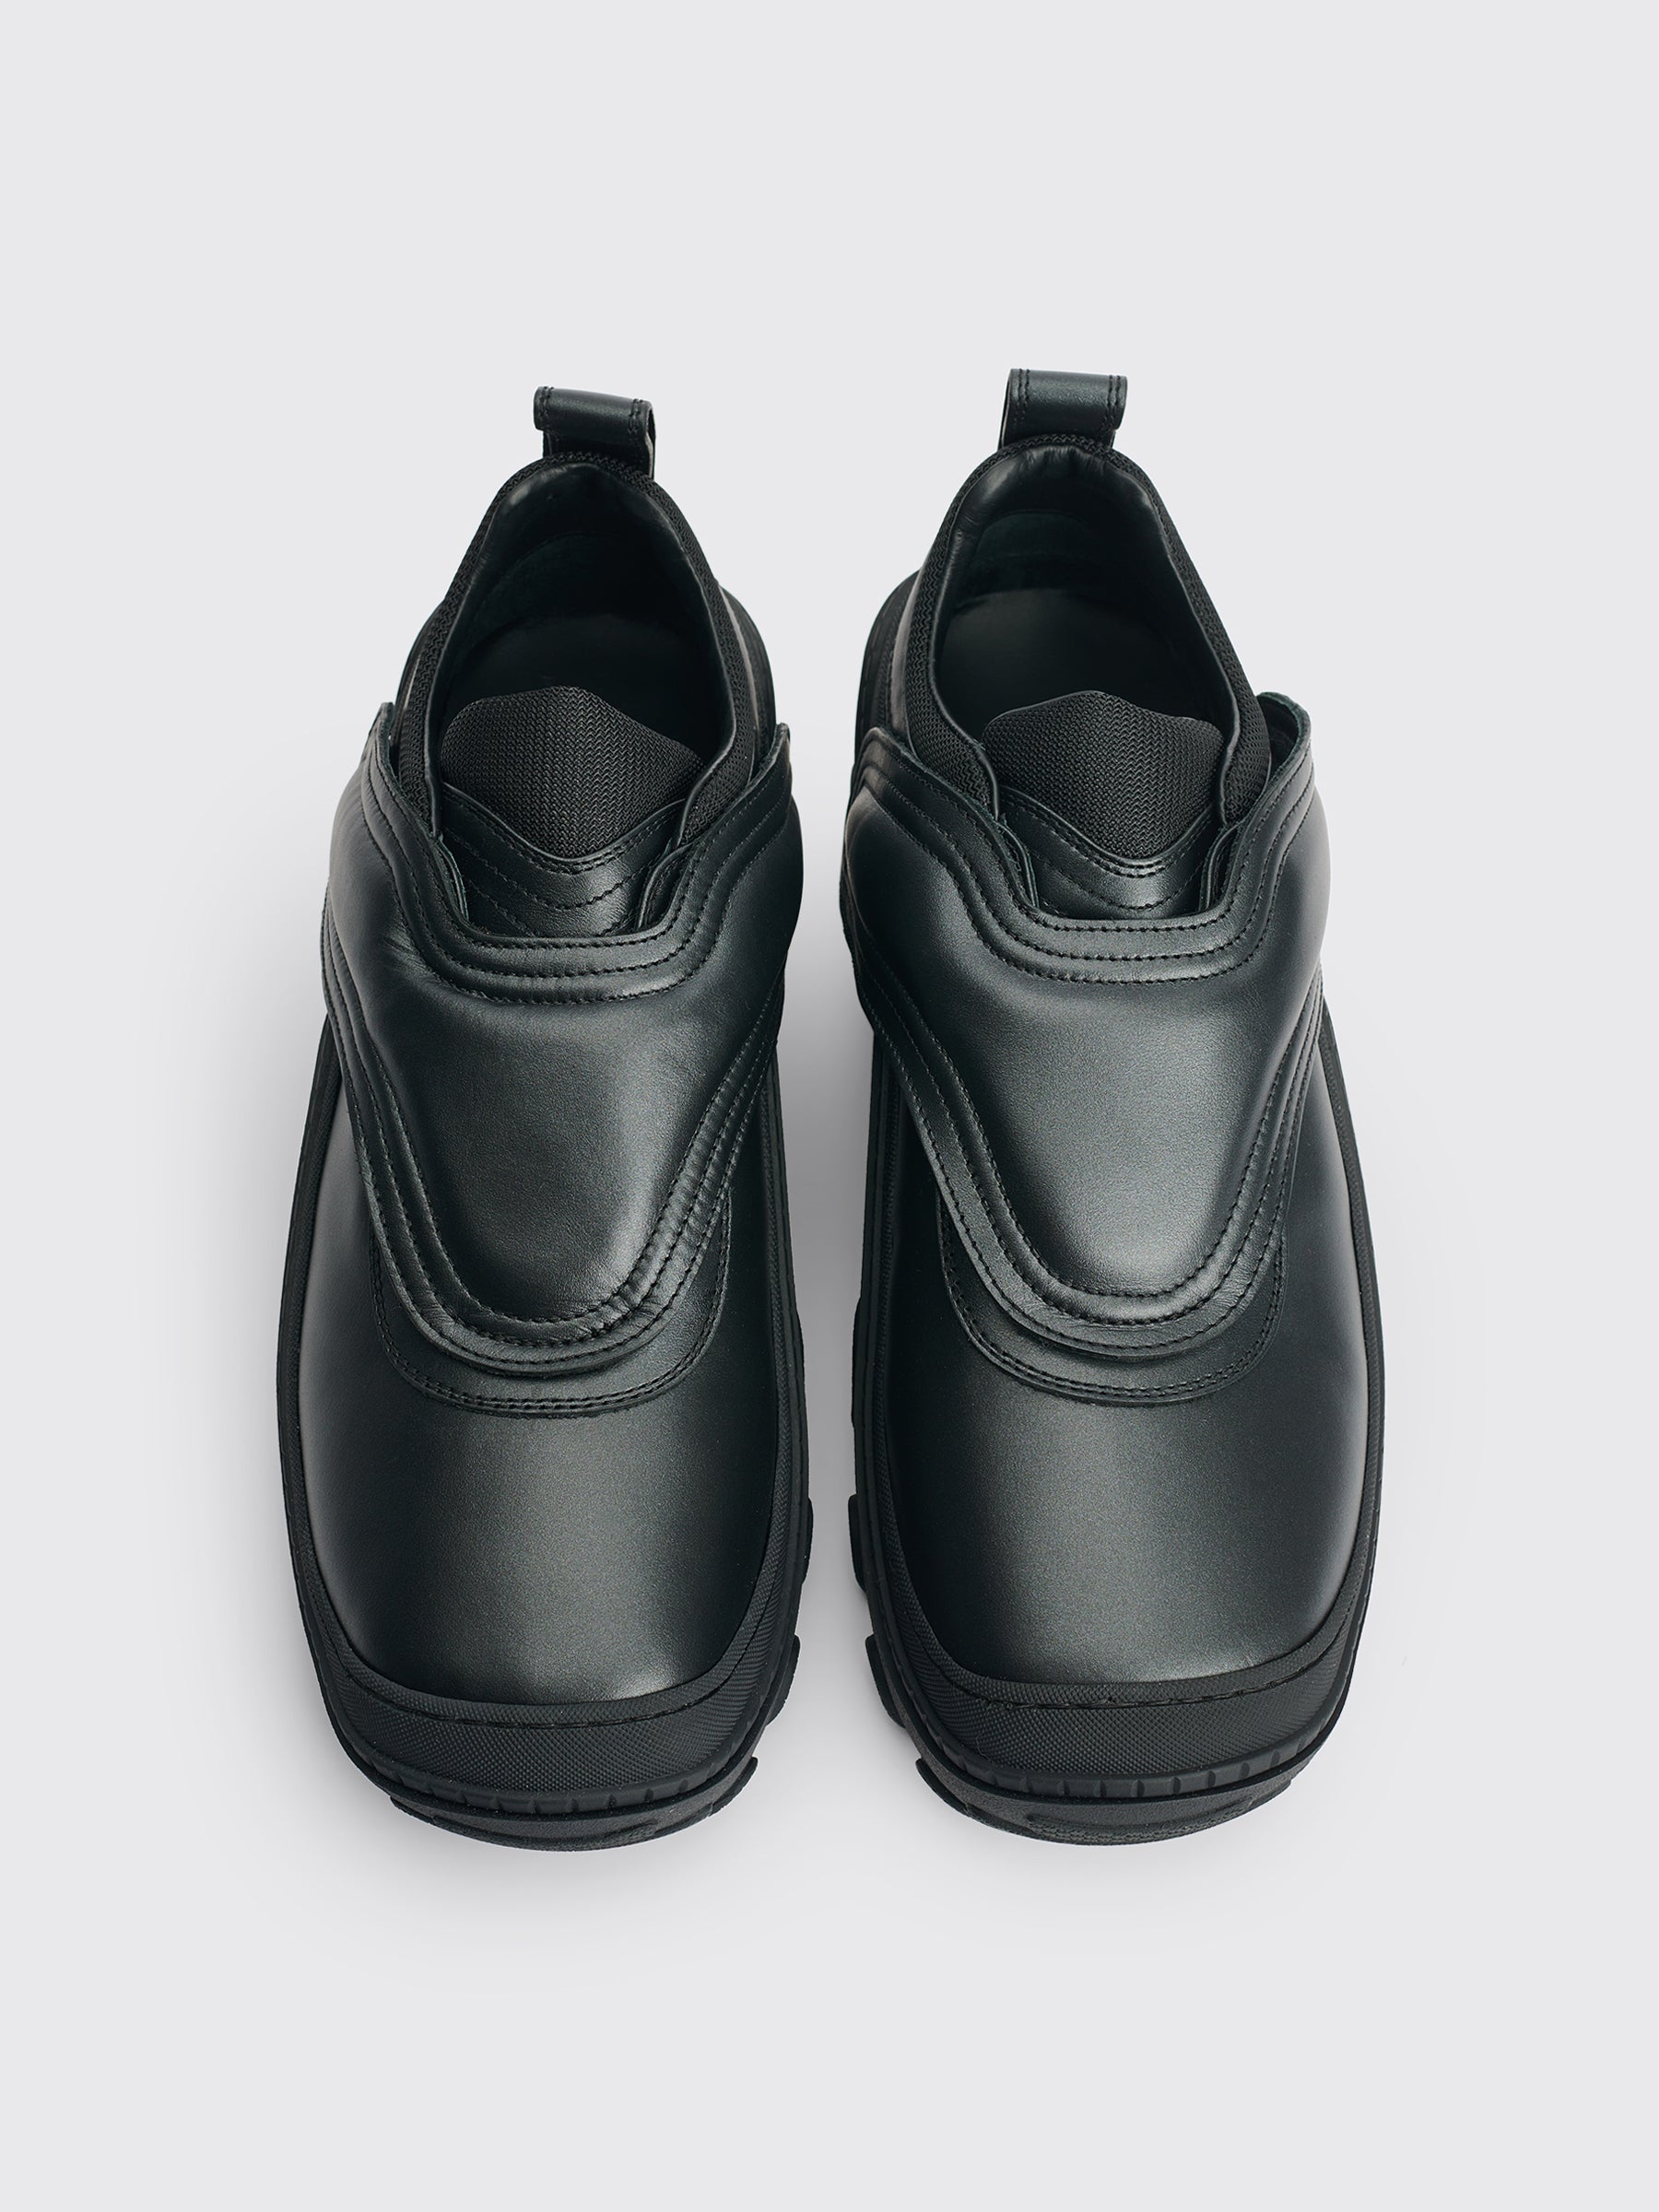 Kiko Kostadinov Tonkin Strap Shoe Leather Charcoal / Jet Black